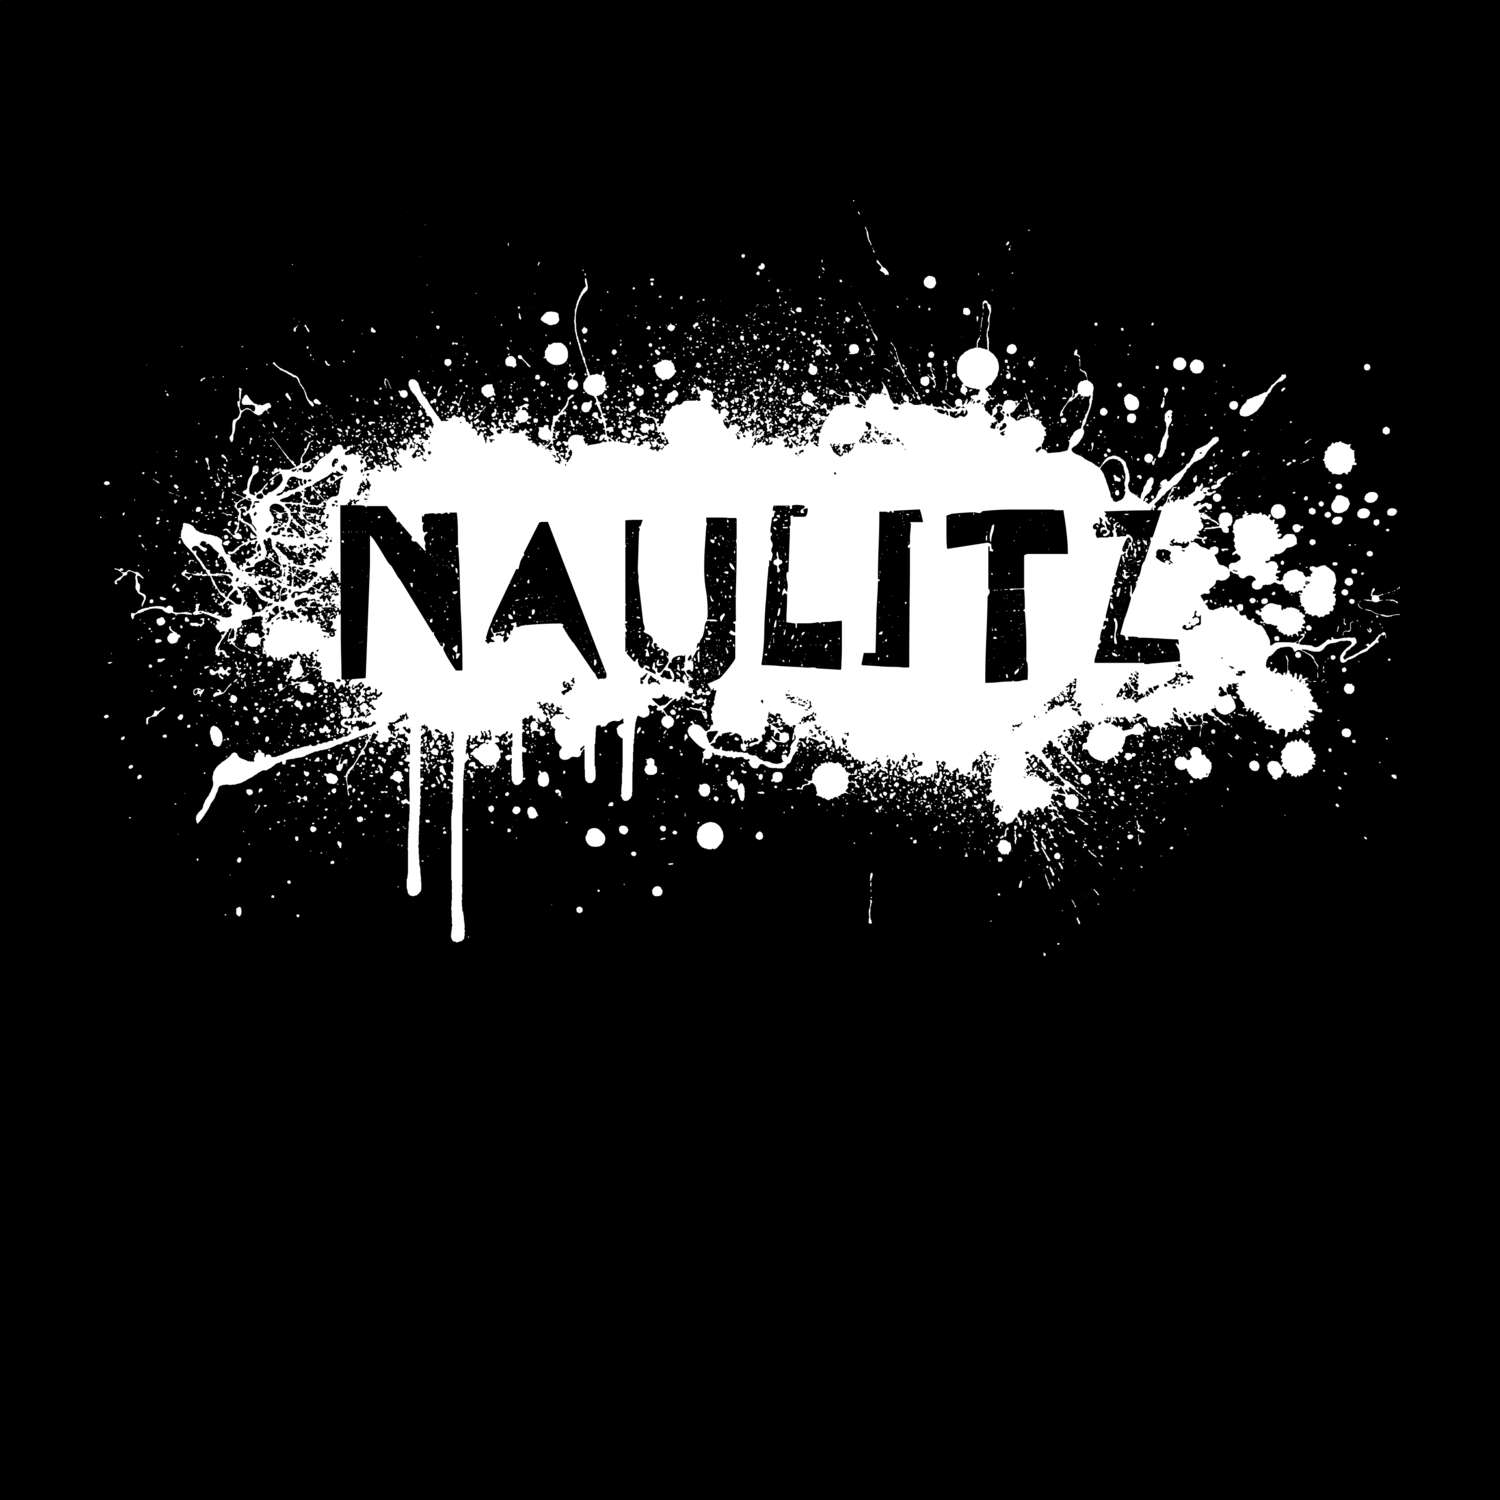 Naulitz T-Shirt »Paint Splash Punk«